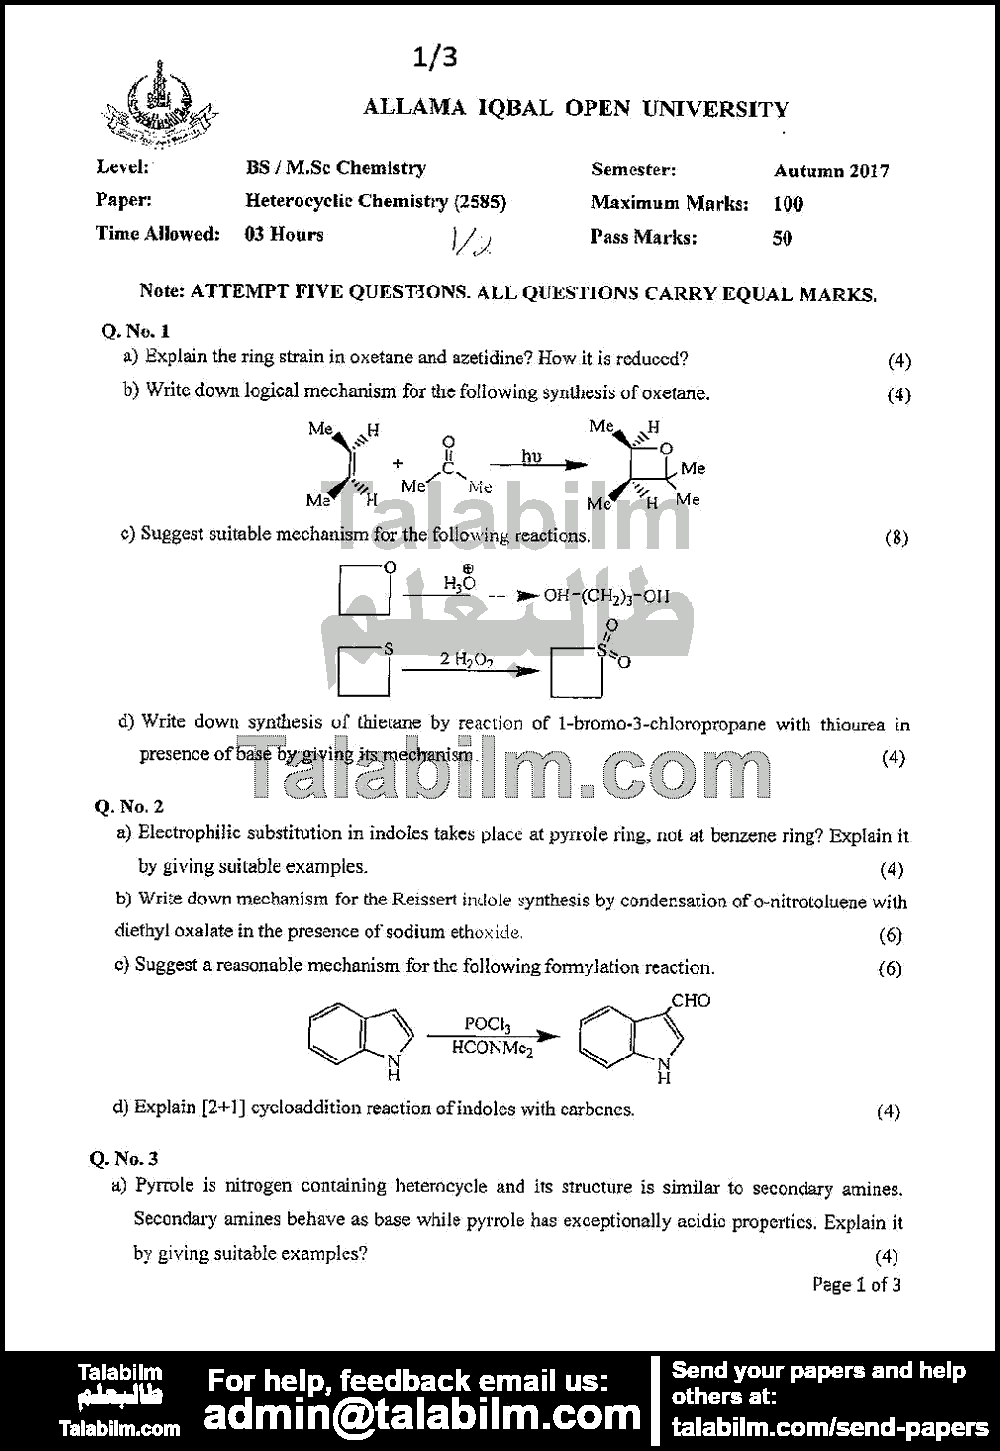 Heterocyclic Chemistry 2585 past paper for Autumn 2017